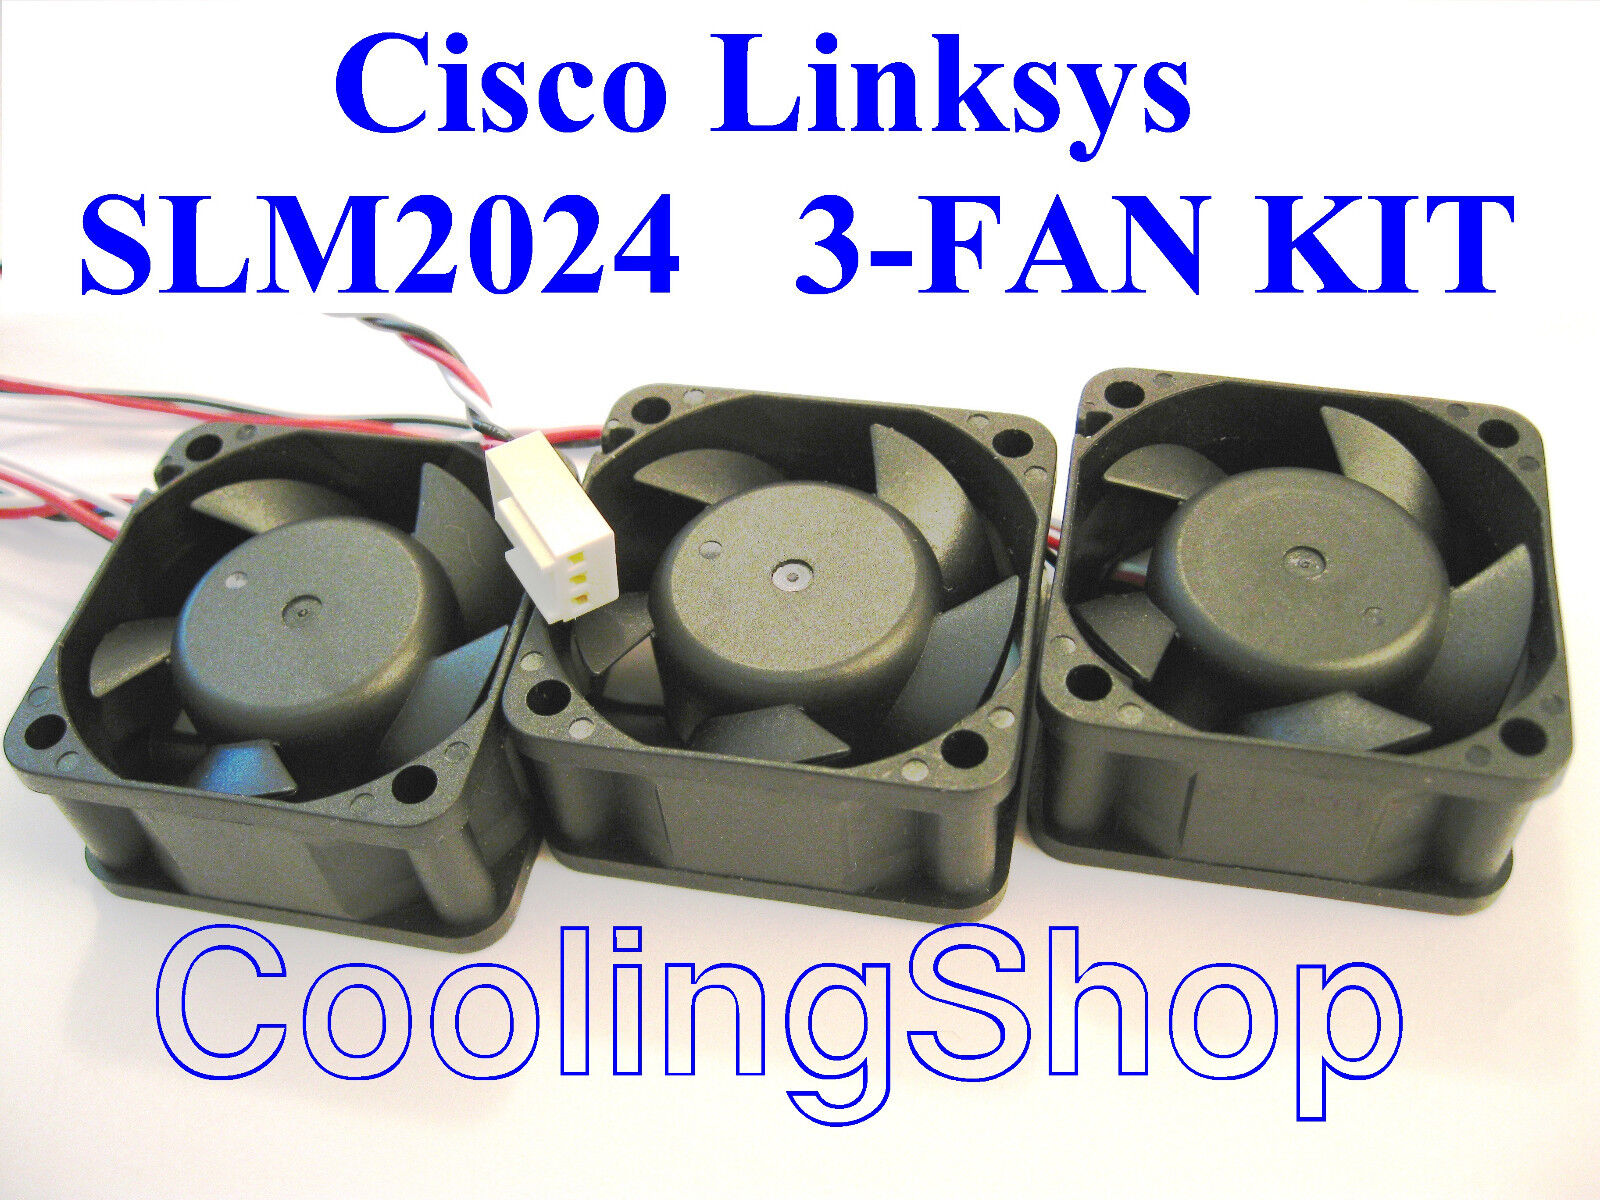 Cisco Linksys SLM2024 Fankit, 3x Replacement Fans for Linksys SLM2024, SLM2048